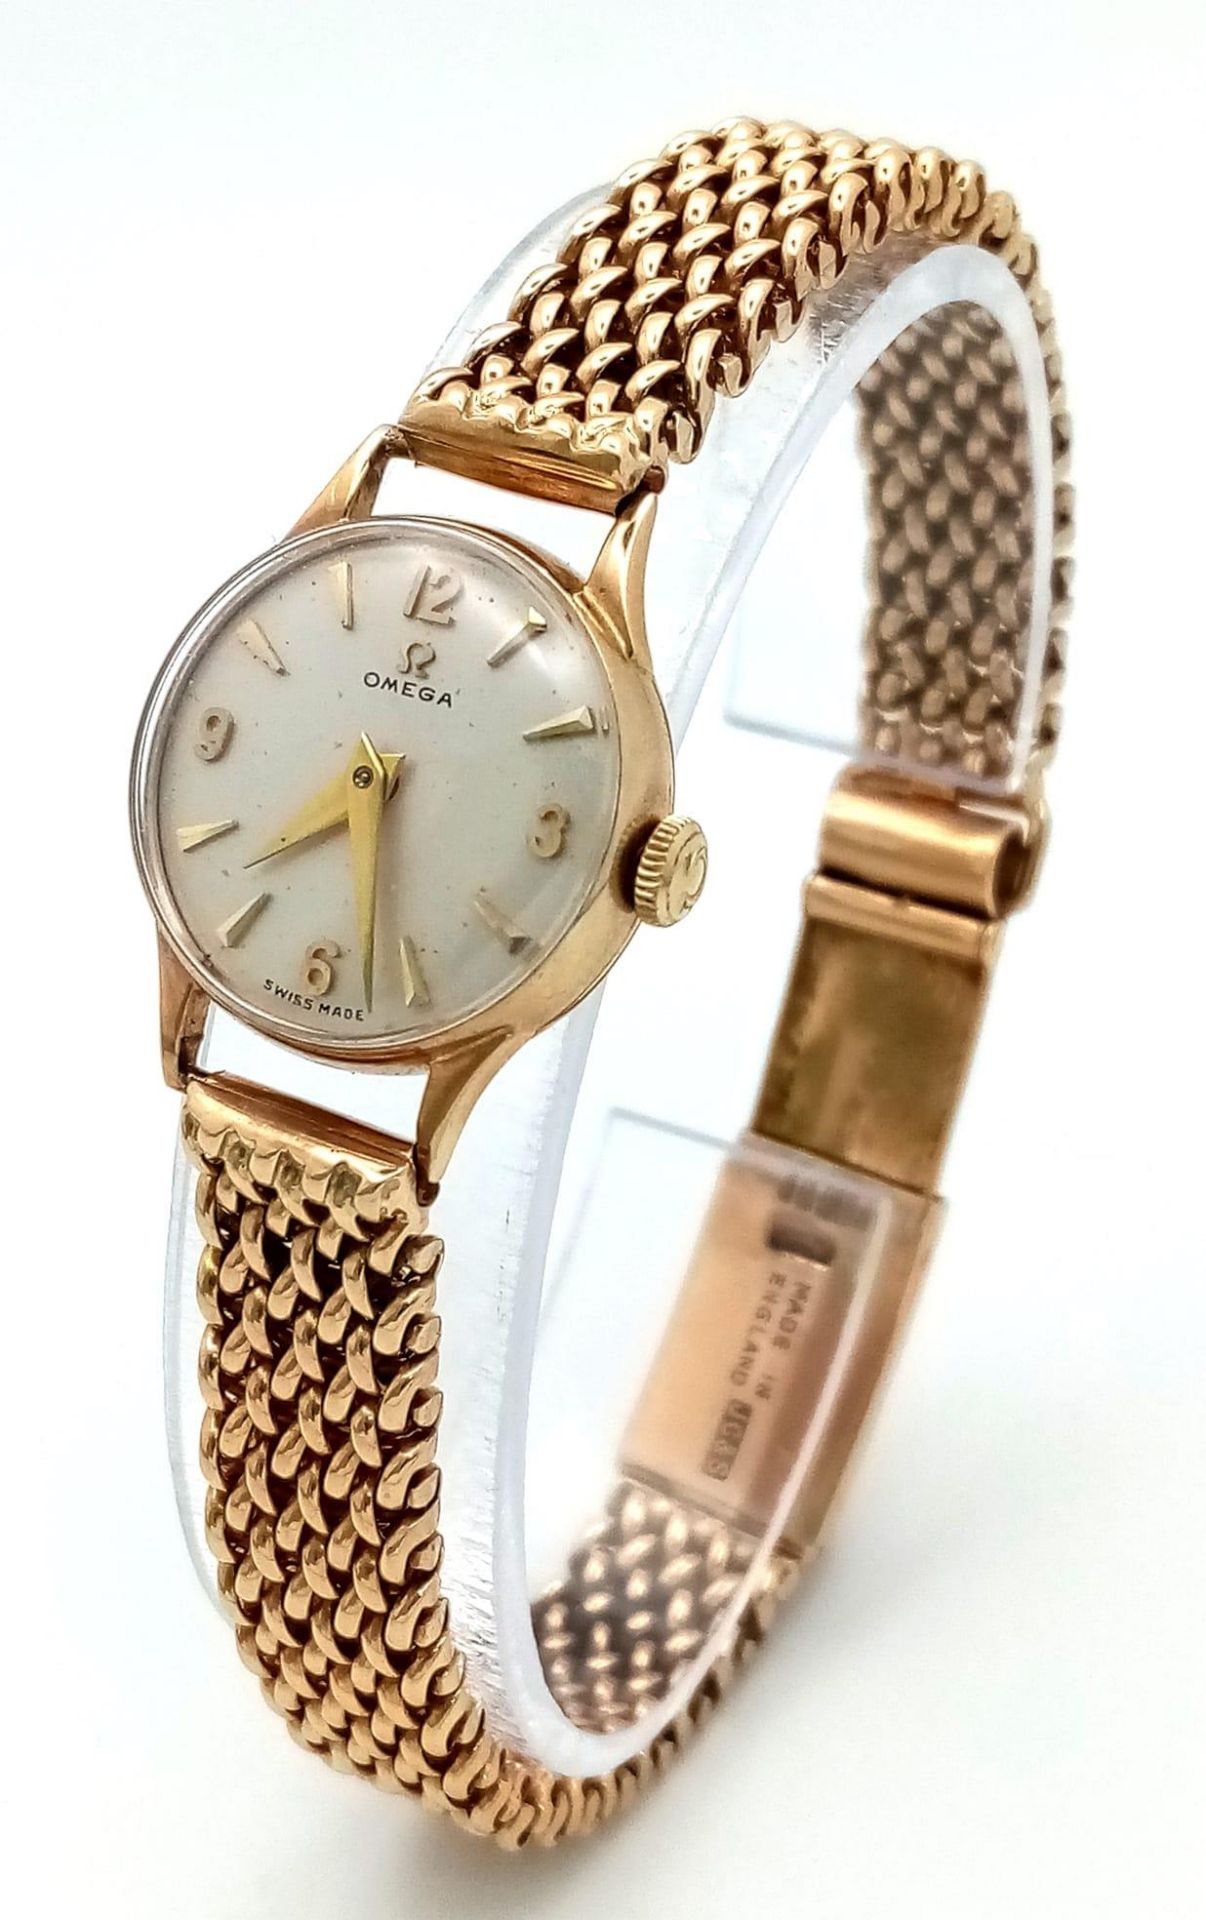 A Vintage 9K Yellow Gold Omega Watch. 9k gold mesh bracelet. 9k gold case - 19mm. White dial.